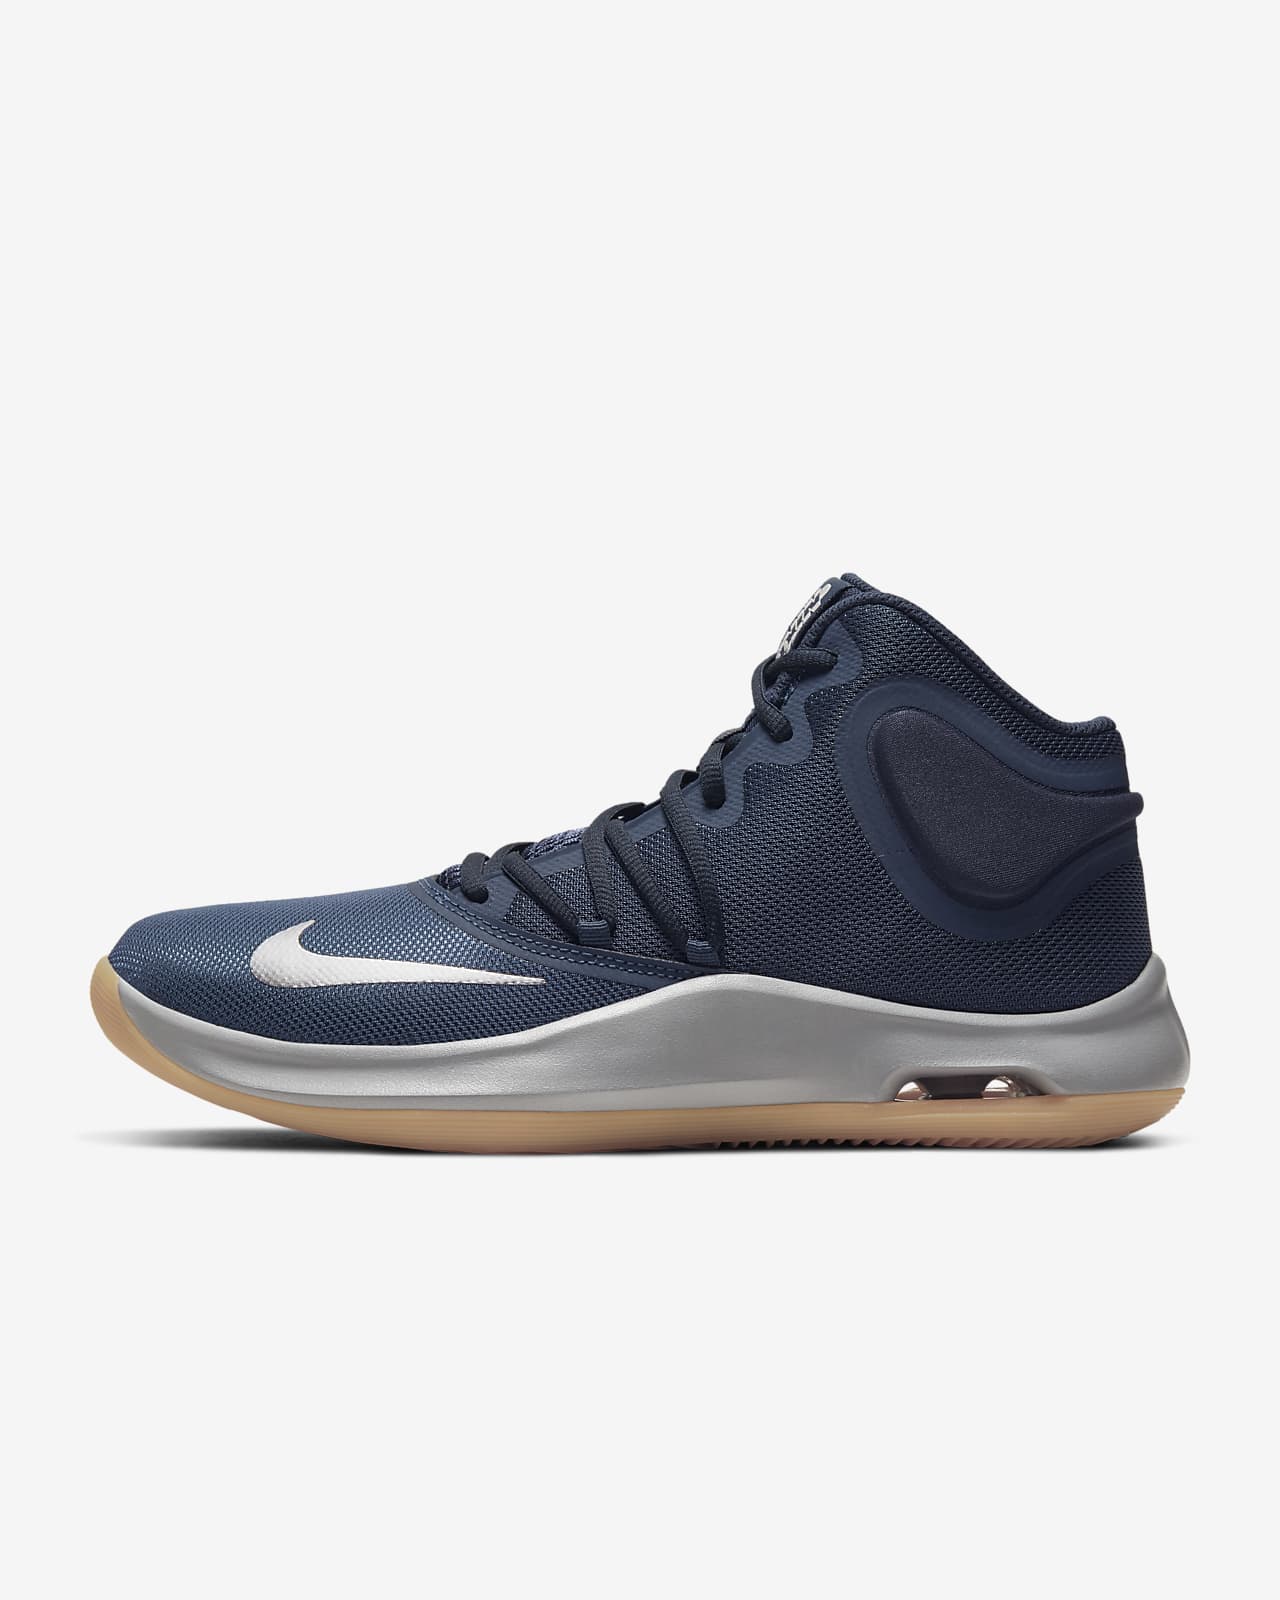 Nike Air Versitile IV Basketball Shoe 